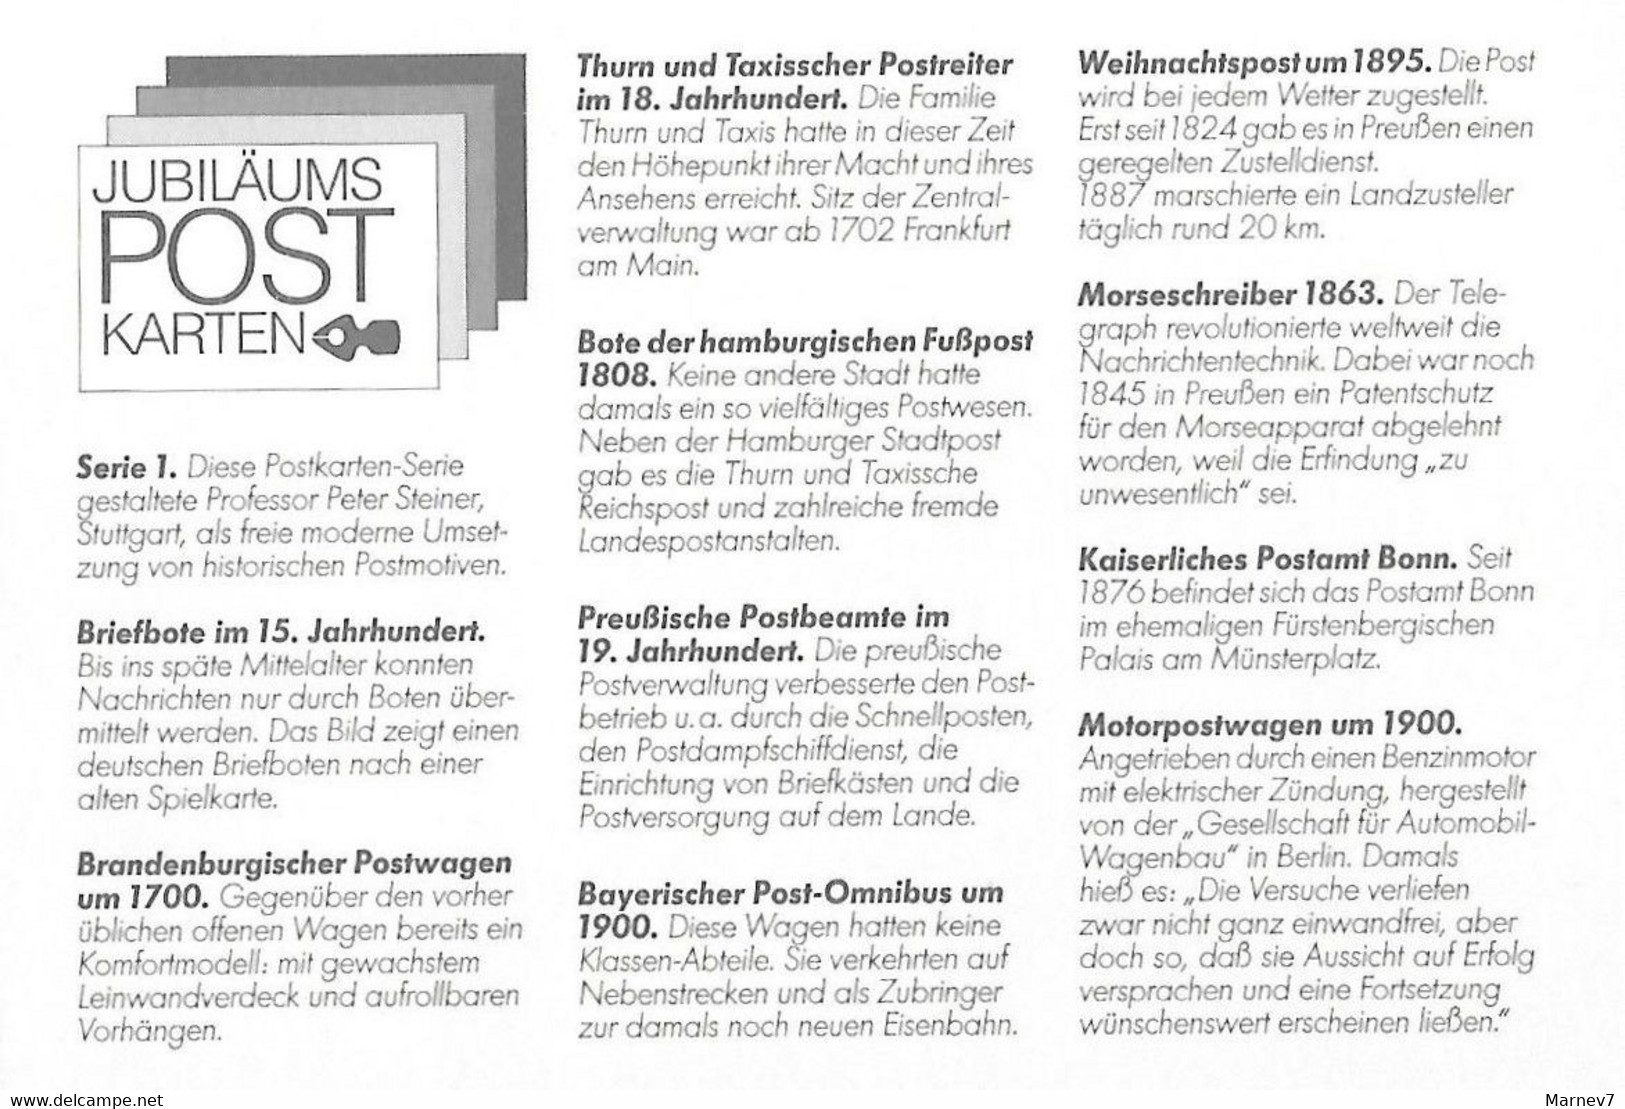 Allemagne - Poste Postes Post - 500 ans jubilee - transport messager télégraphie omnibus messager Postwagen Poketzuster